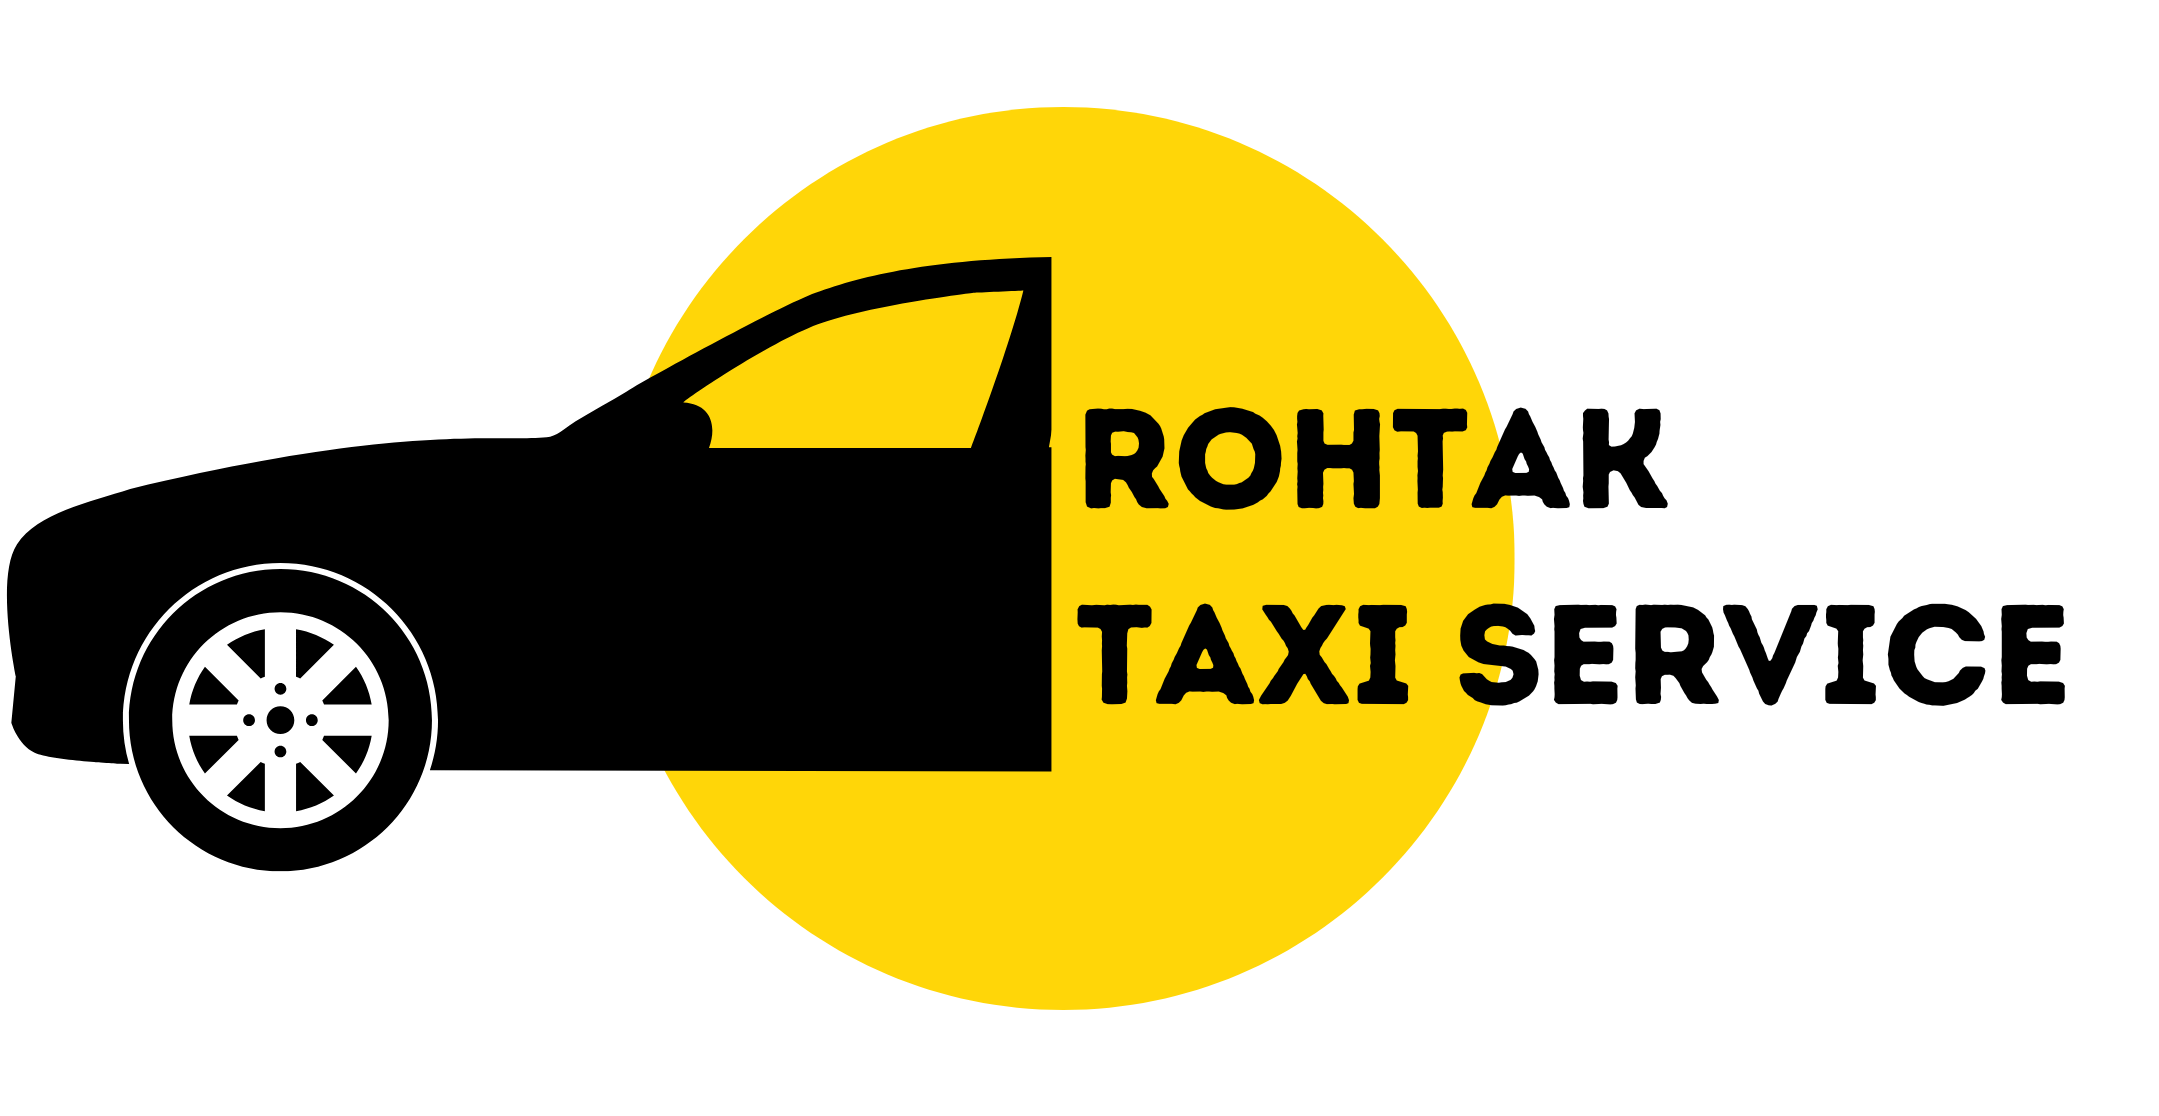 Rohtak Taxi Service